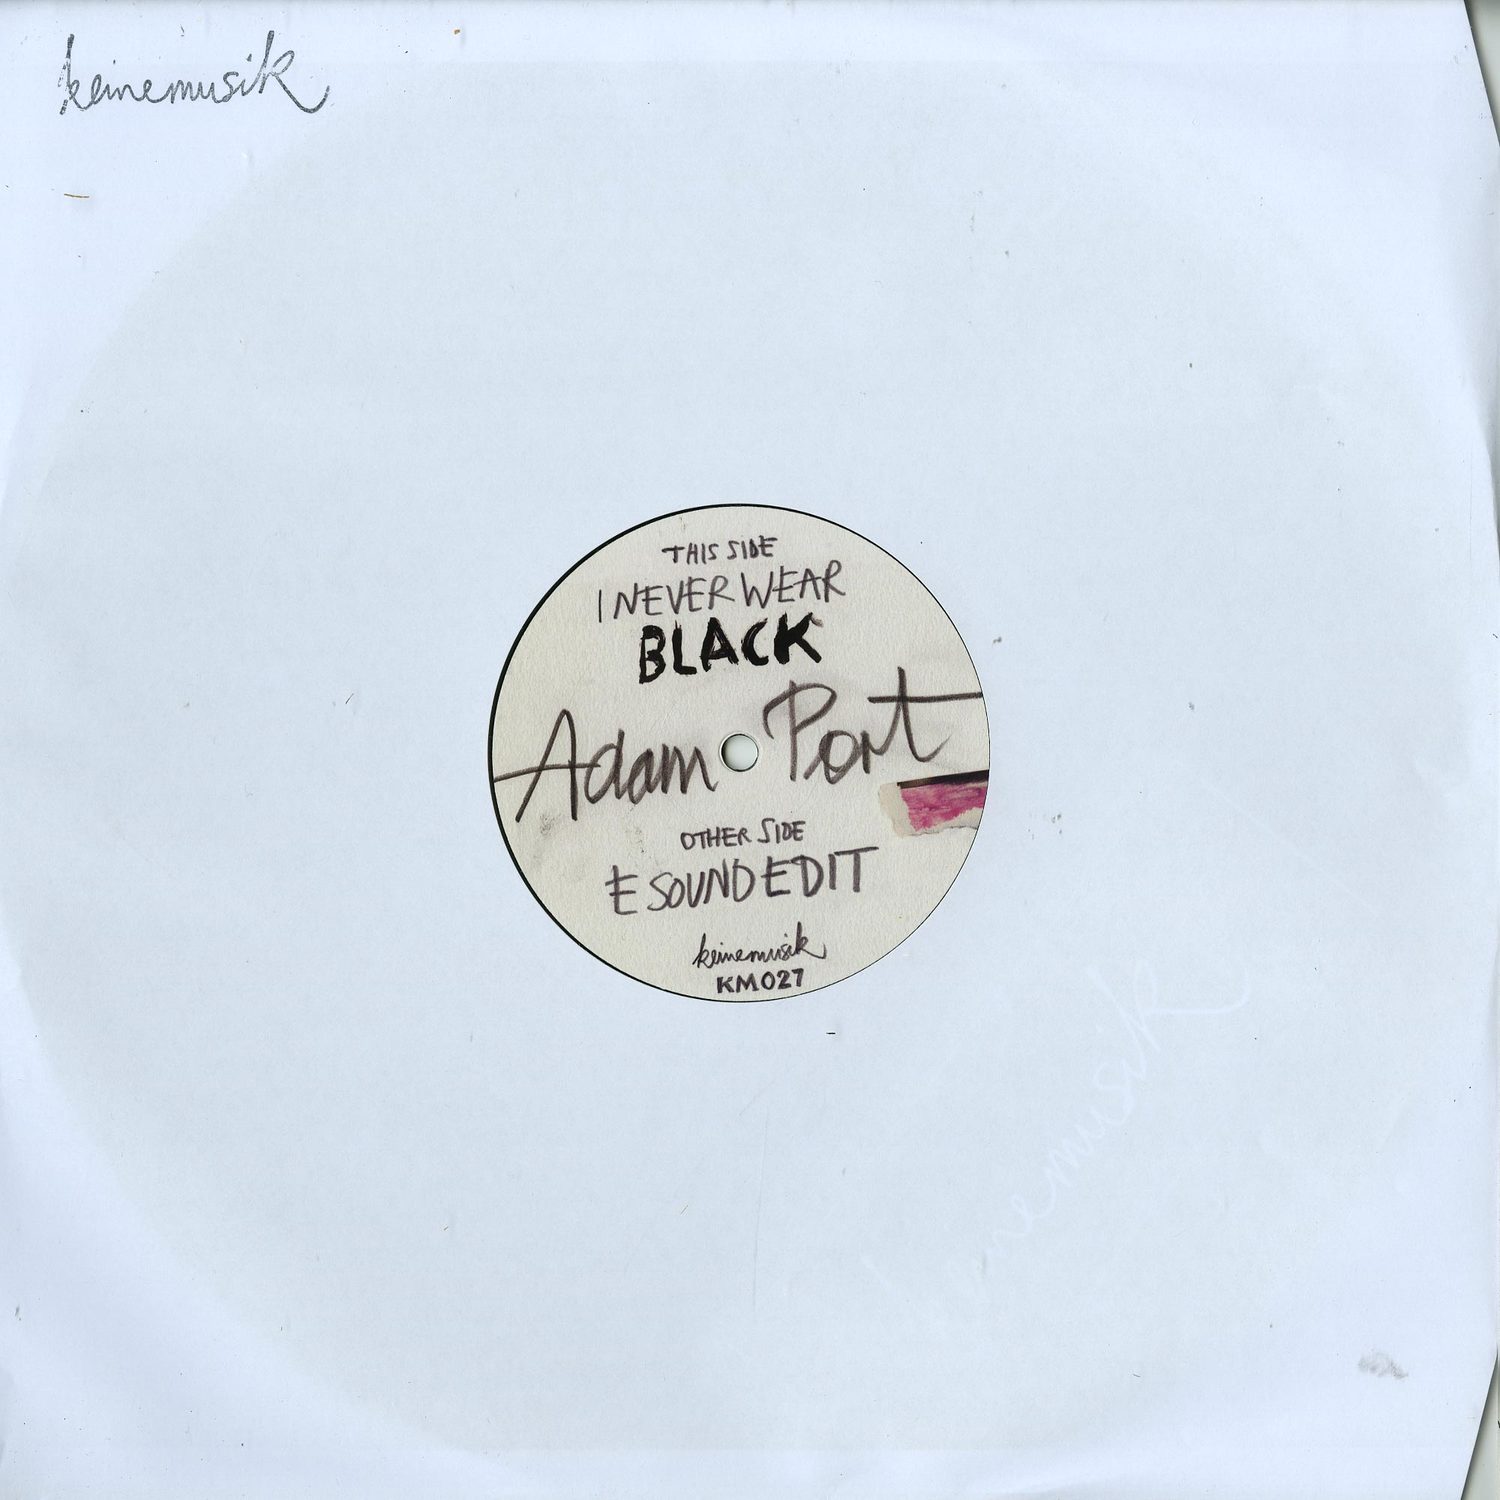 Adam Port - I NEVER WEAR BLACK EP